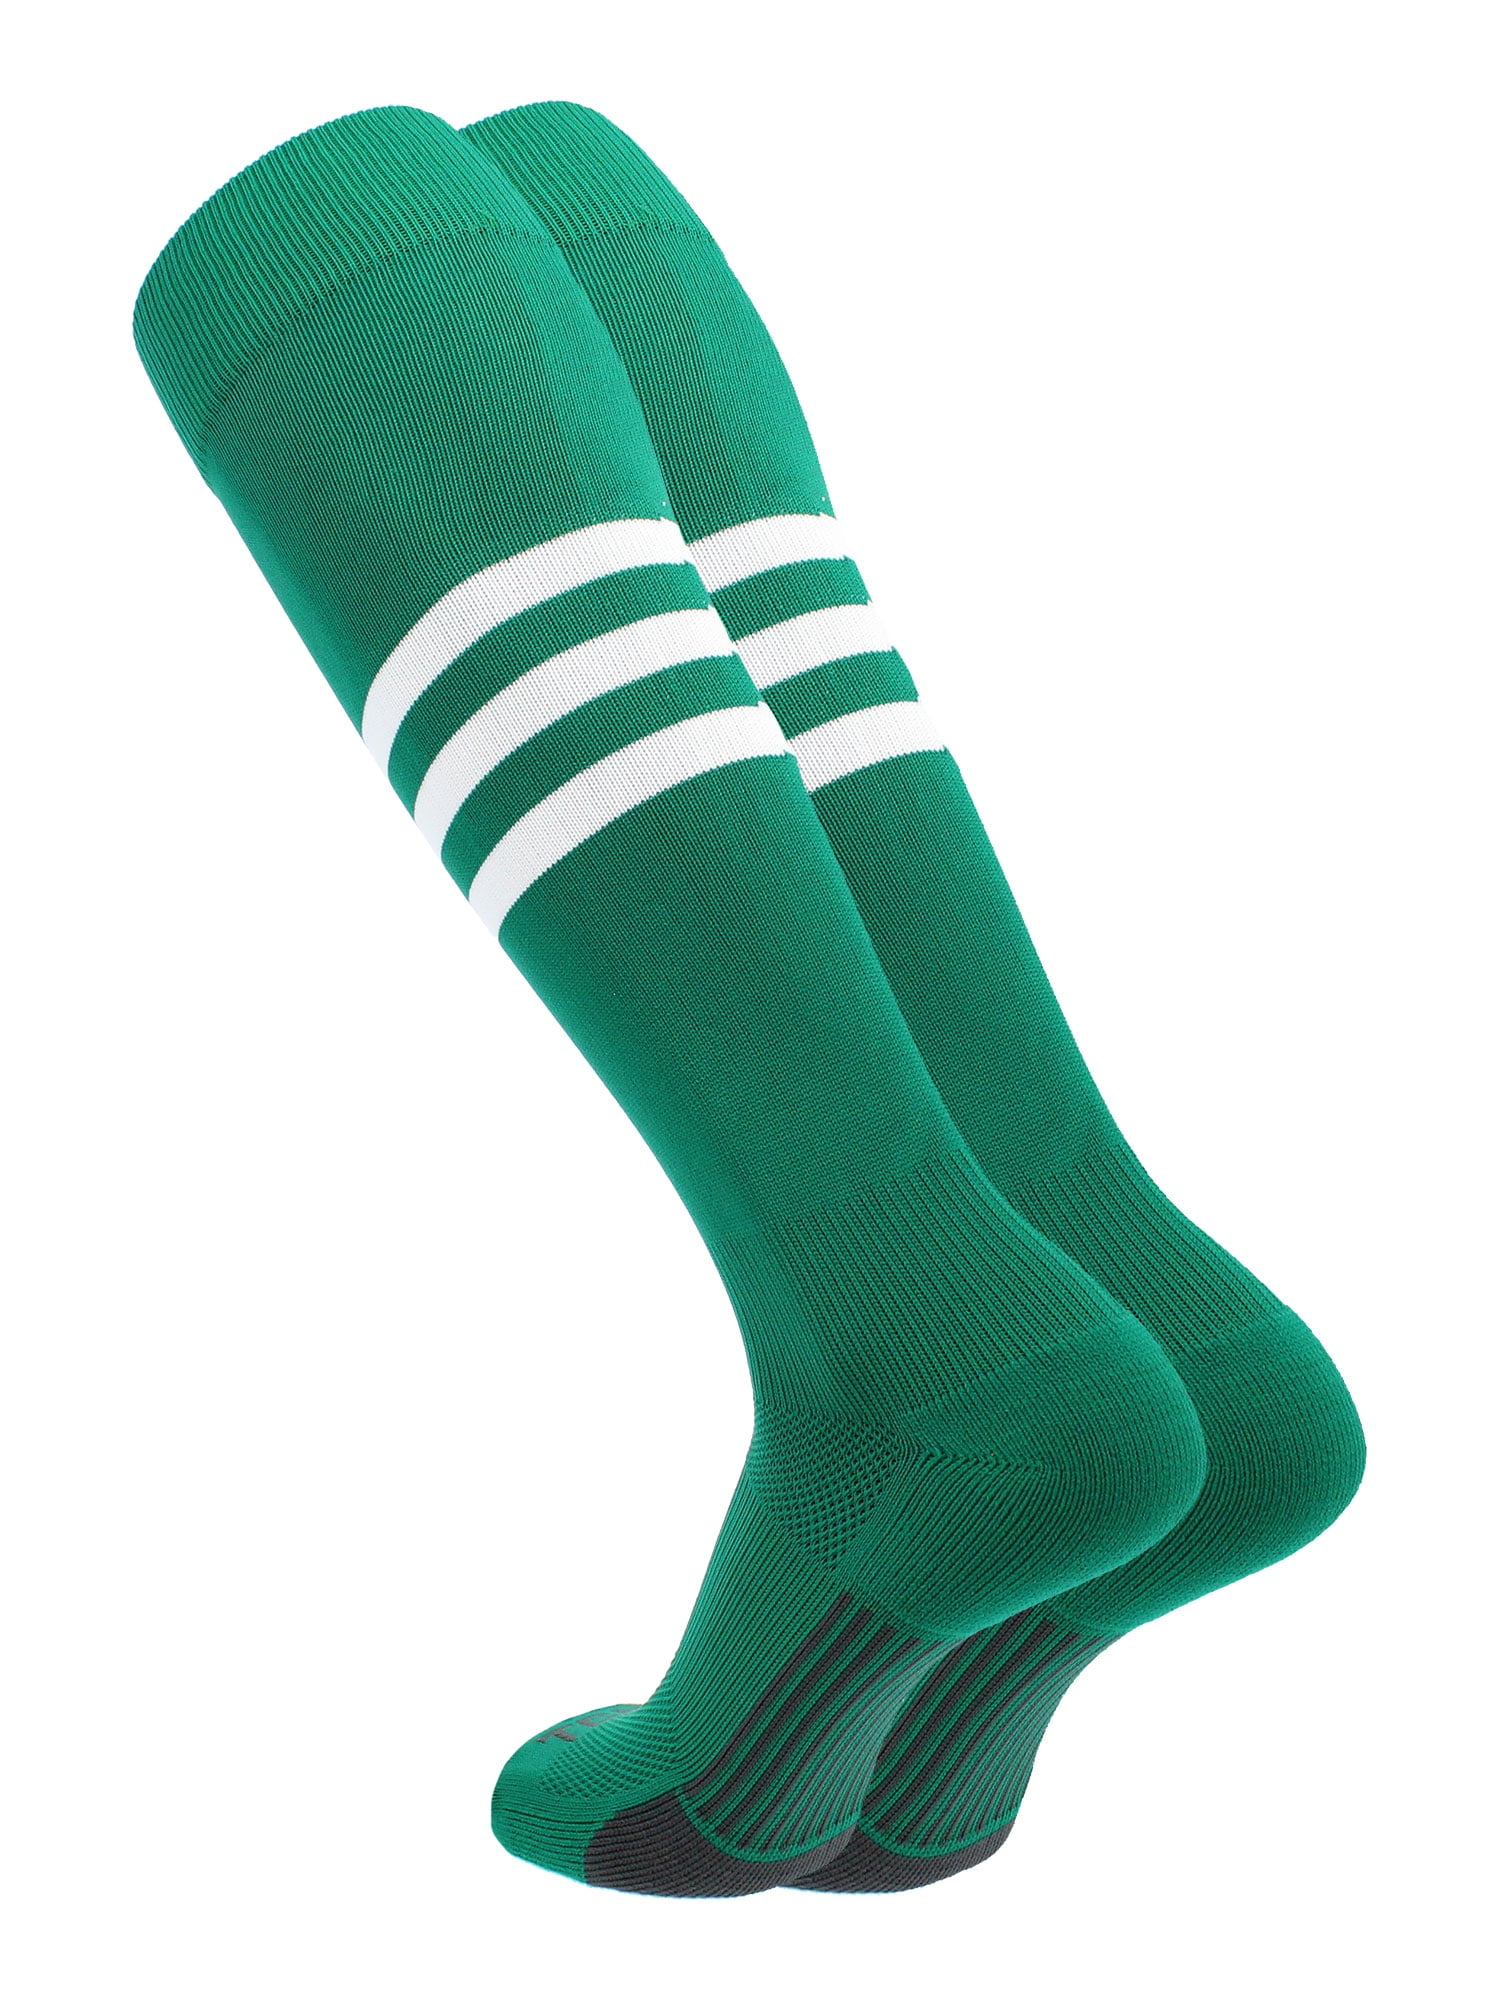 TCK Hoop Rugby Socks with Stripes for Men Soccer Socks